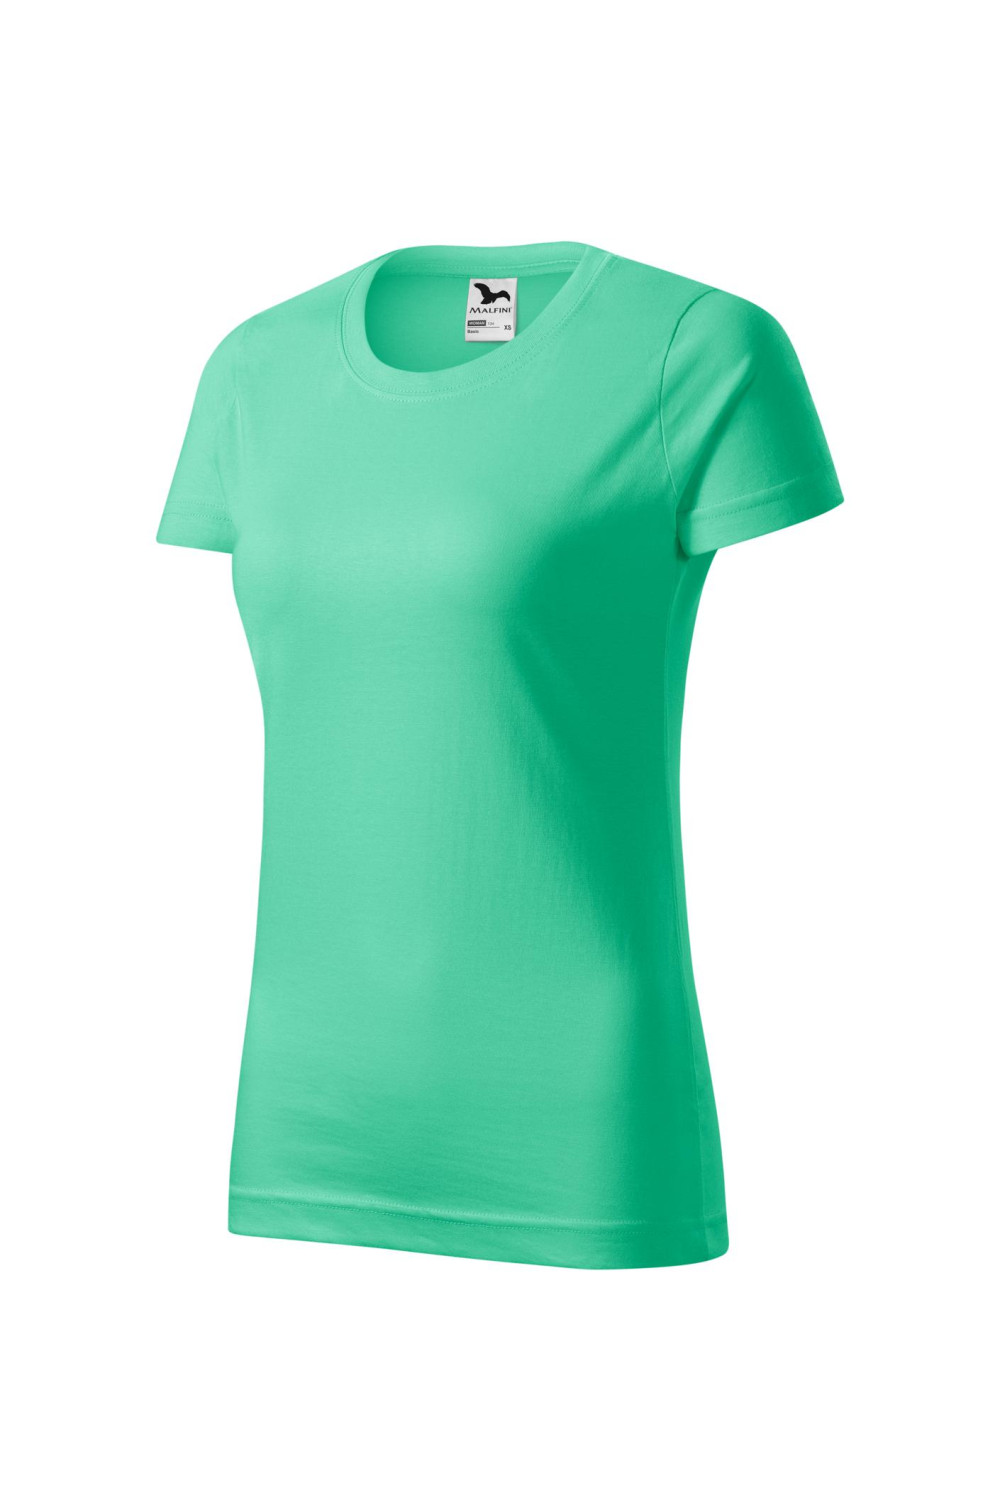 BASIC 134 MALFINI Koszulka damska 100% bawełna t-shirt miętowy